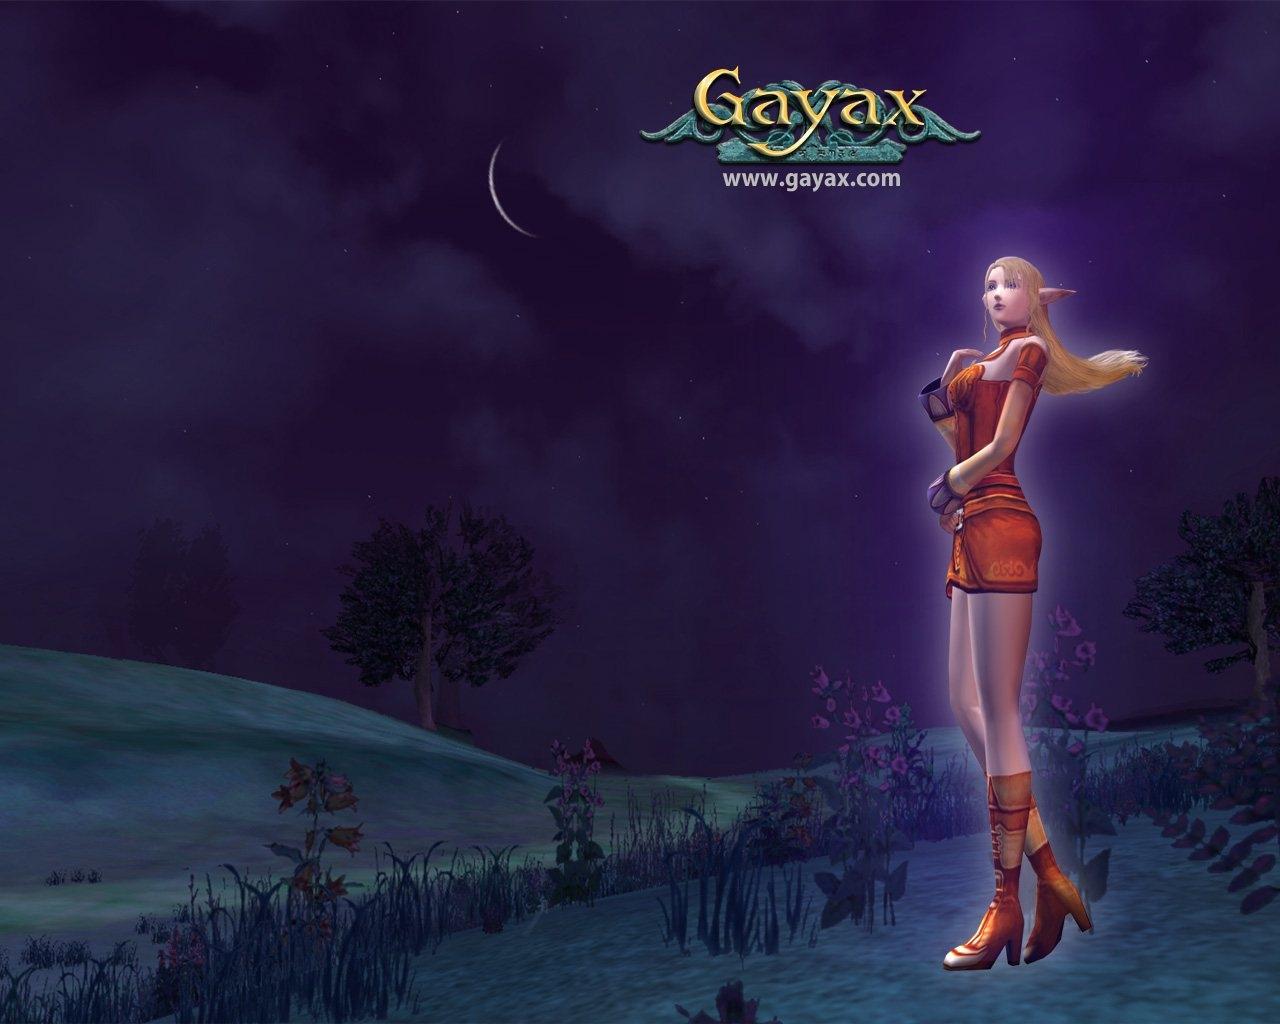 Gayax at 2048 x 2048 iPad size wallpapers HD quality